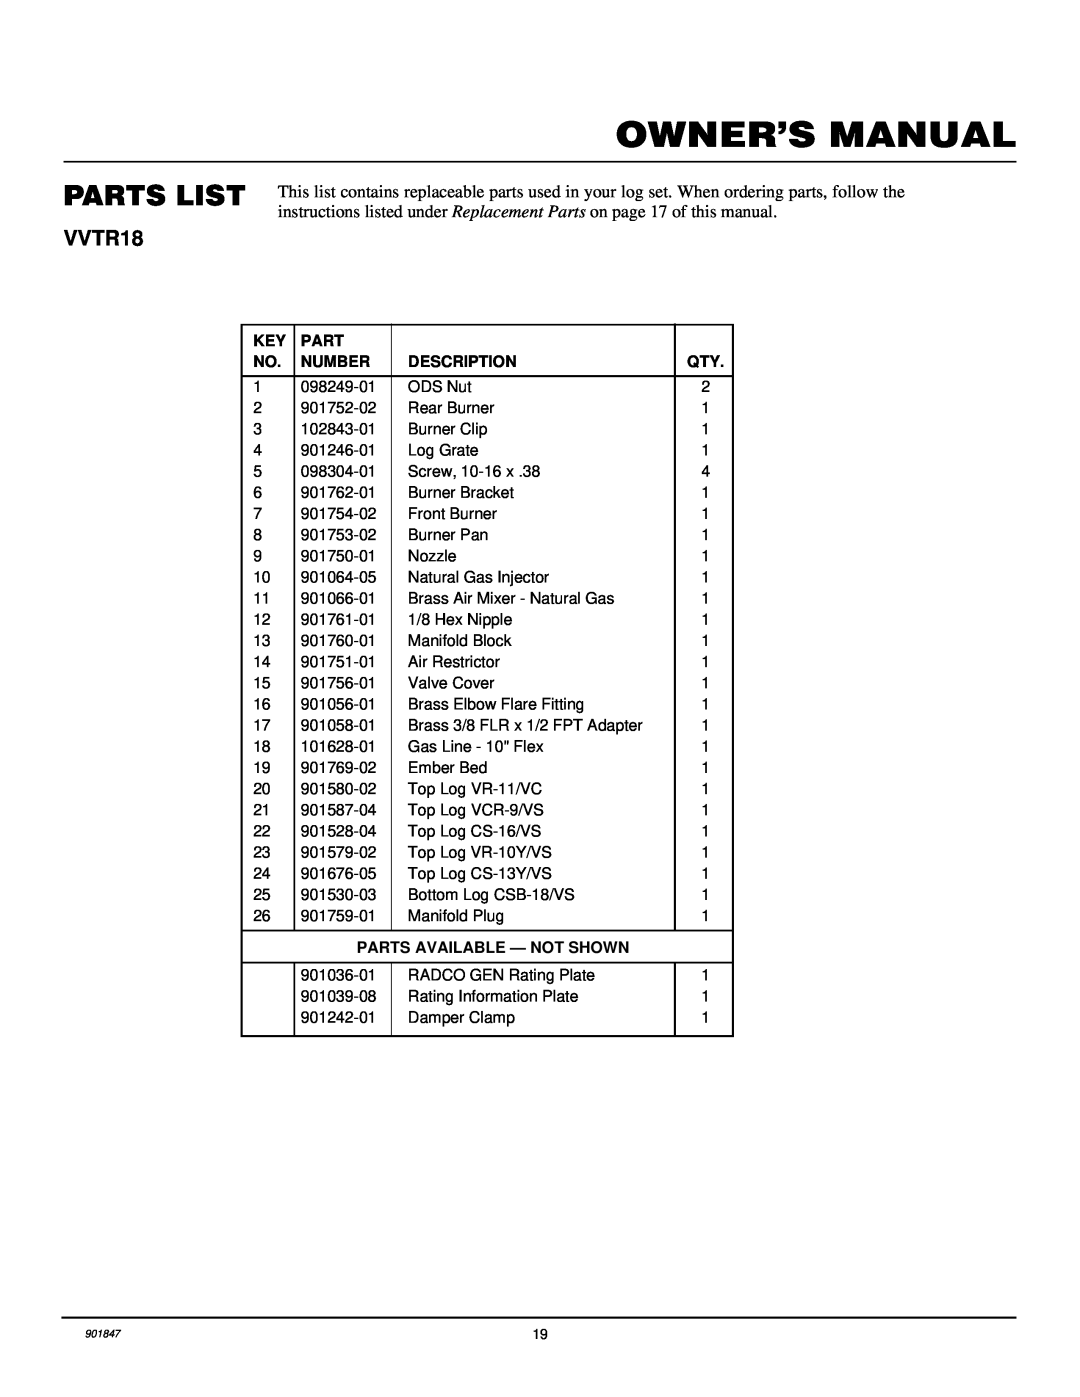 Desa VVTR18, VVTR24 installation manual Parts List, Owner’S Manual, Number, Description, Parts Available - Not Shown 